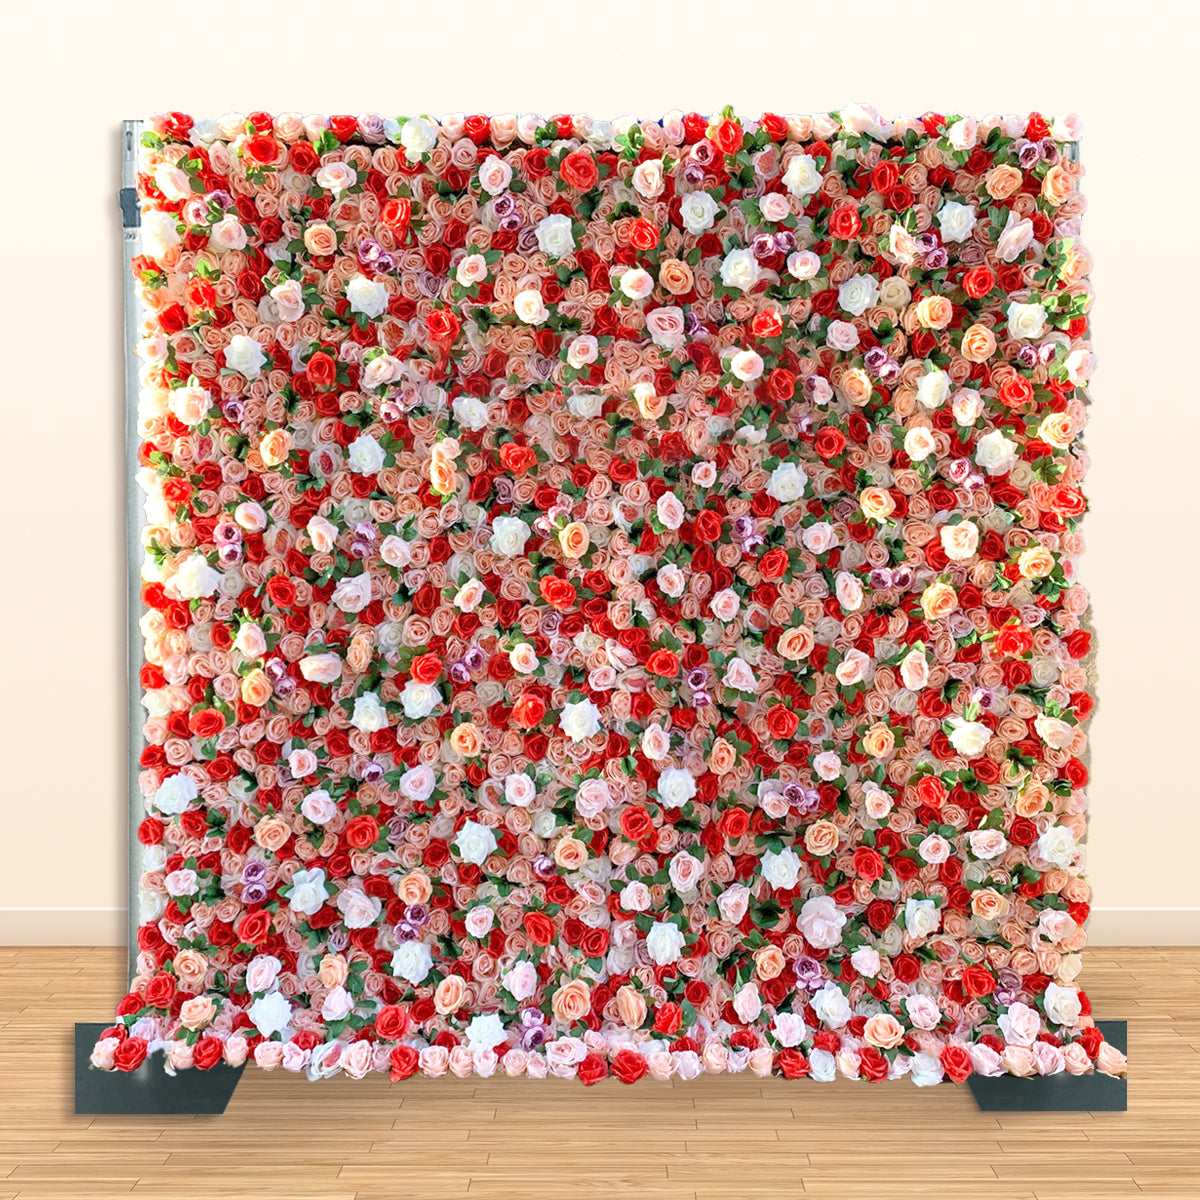 3D Artificial Flower Wall Arrangement Wedding Party Birthday Backdrop Decor HQ1162